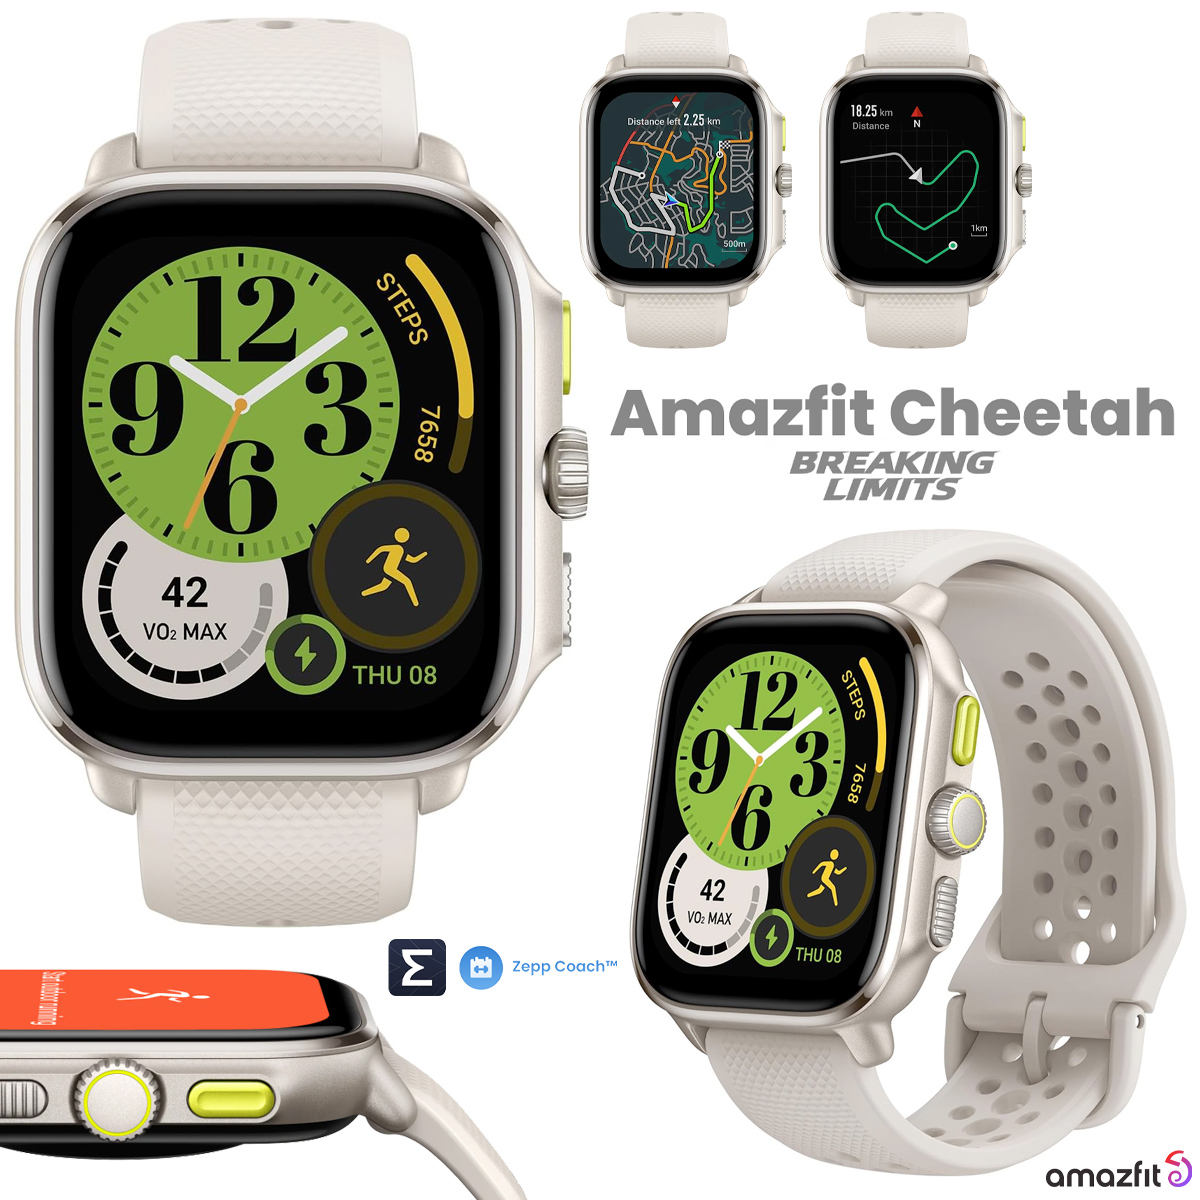 Smartwatch Amazfit Cheetah Square